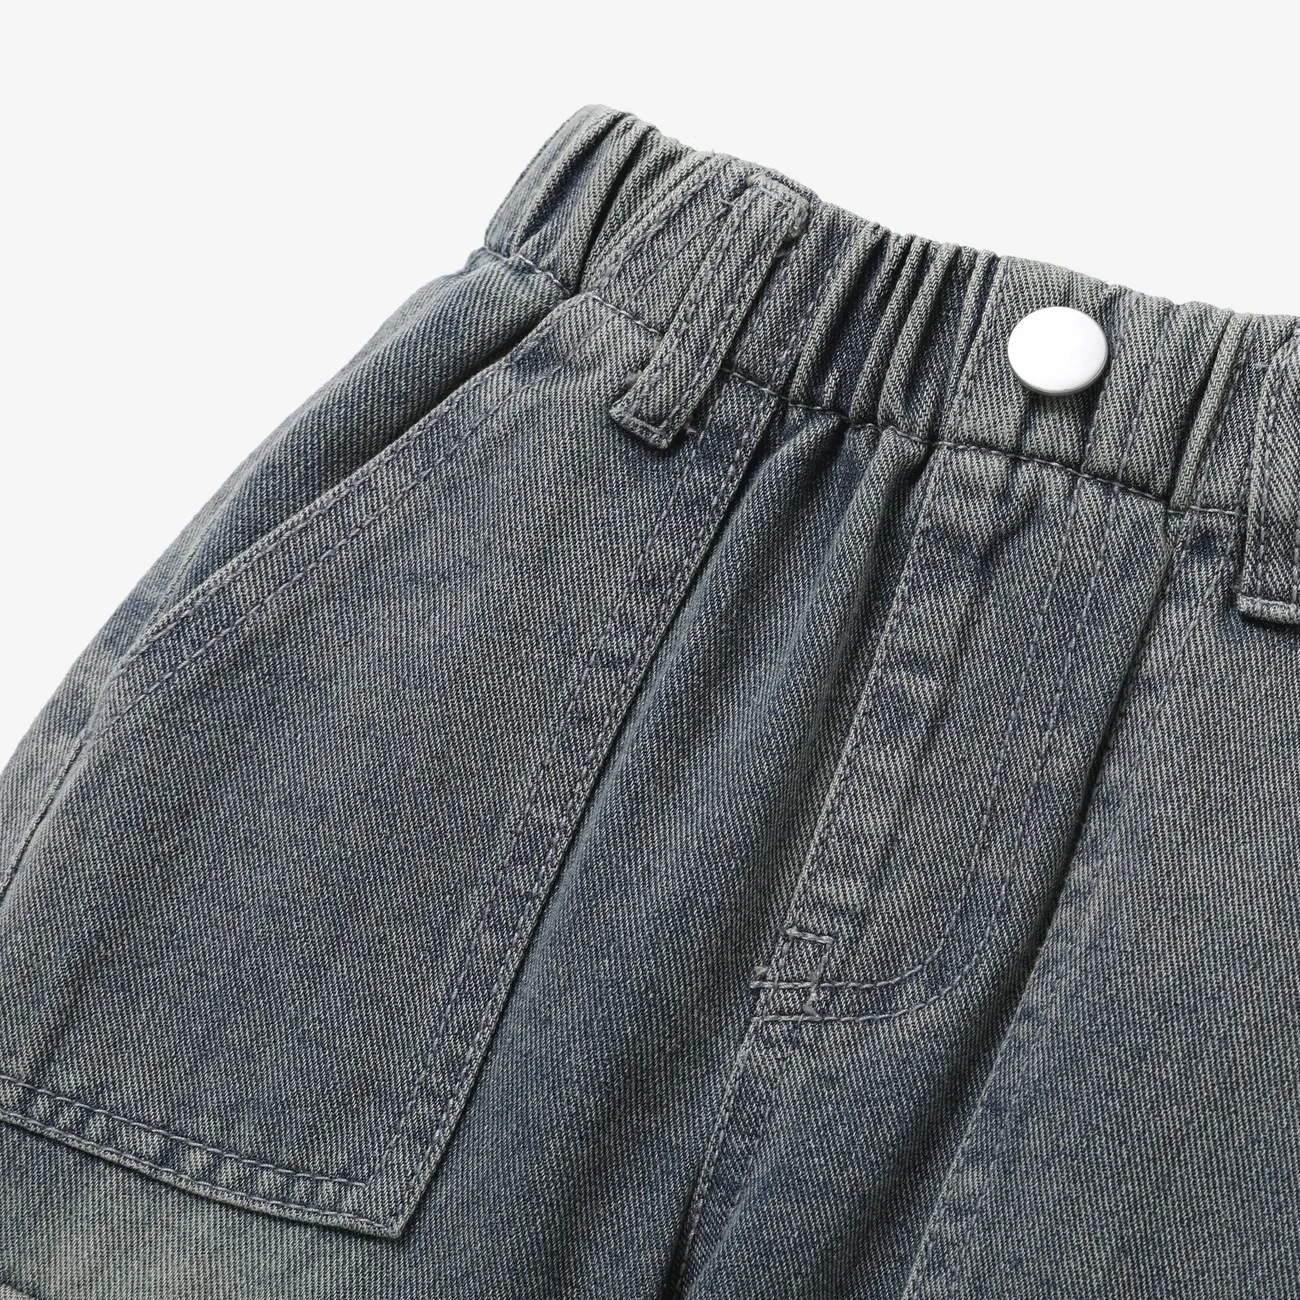 Kleinkind / Kind Mädchen / Junge Vintage Arbeitskleidung Denim Patch Pocket Jeans schlammgelb big image 1